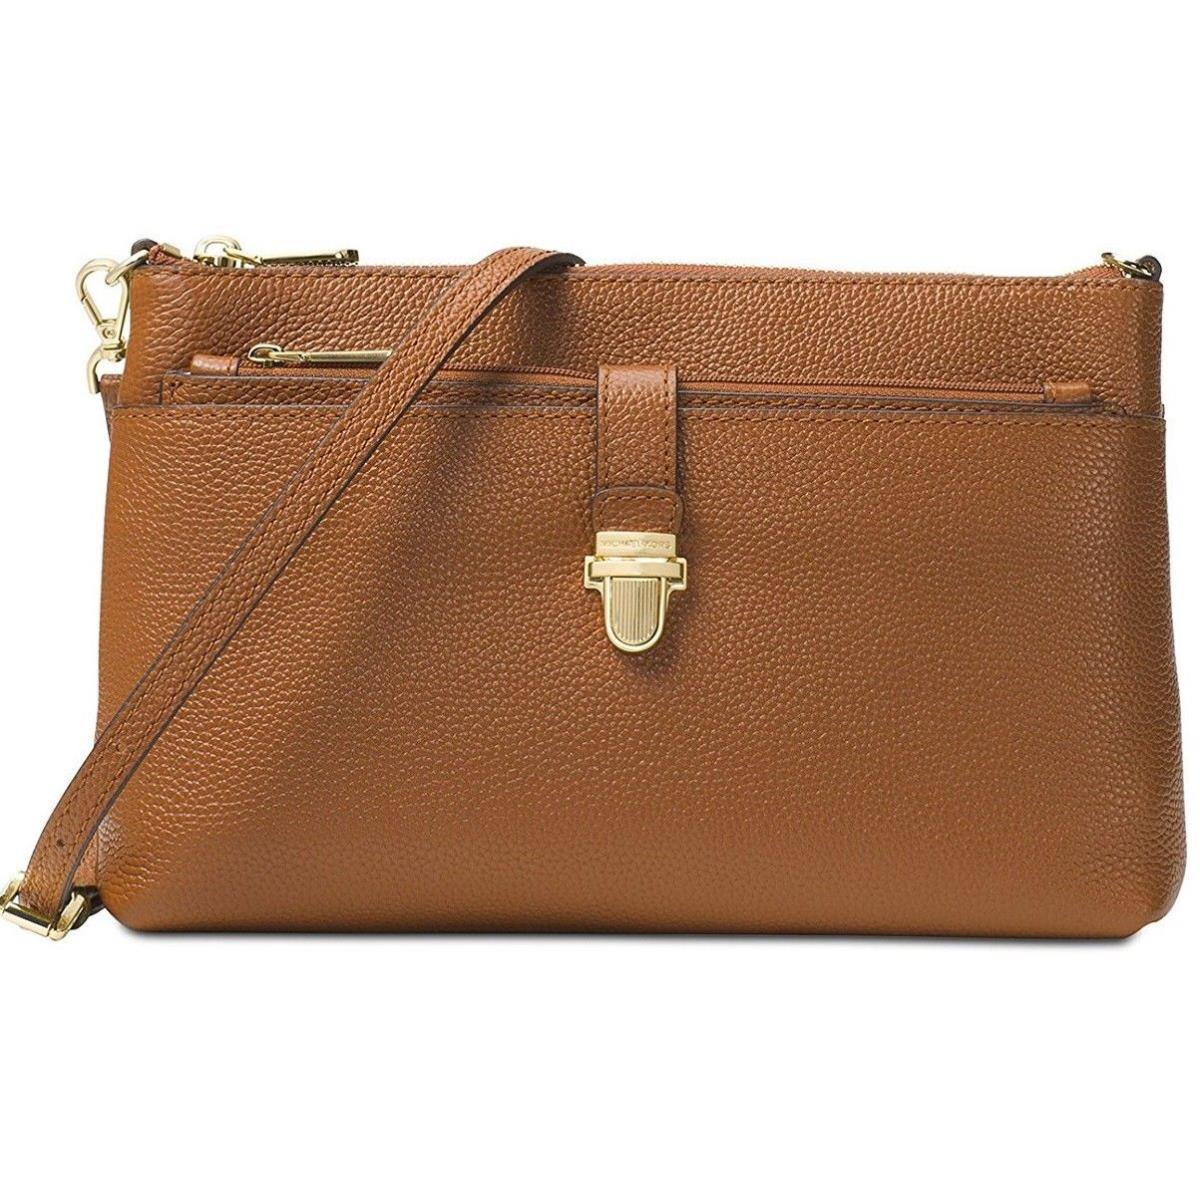 Michael Kors Leather Mercer Large Snap Pocket Crossbody Bag Clutch Luggage Brown - Brown Exterior, Gold Hardware